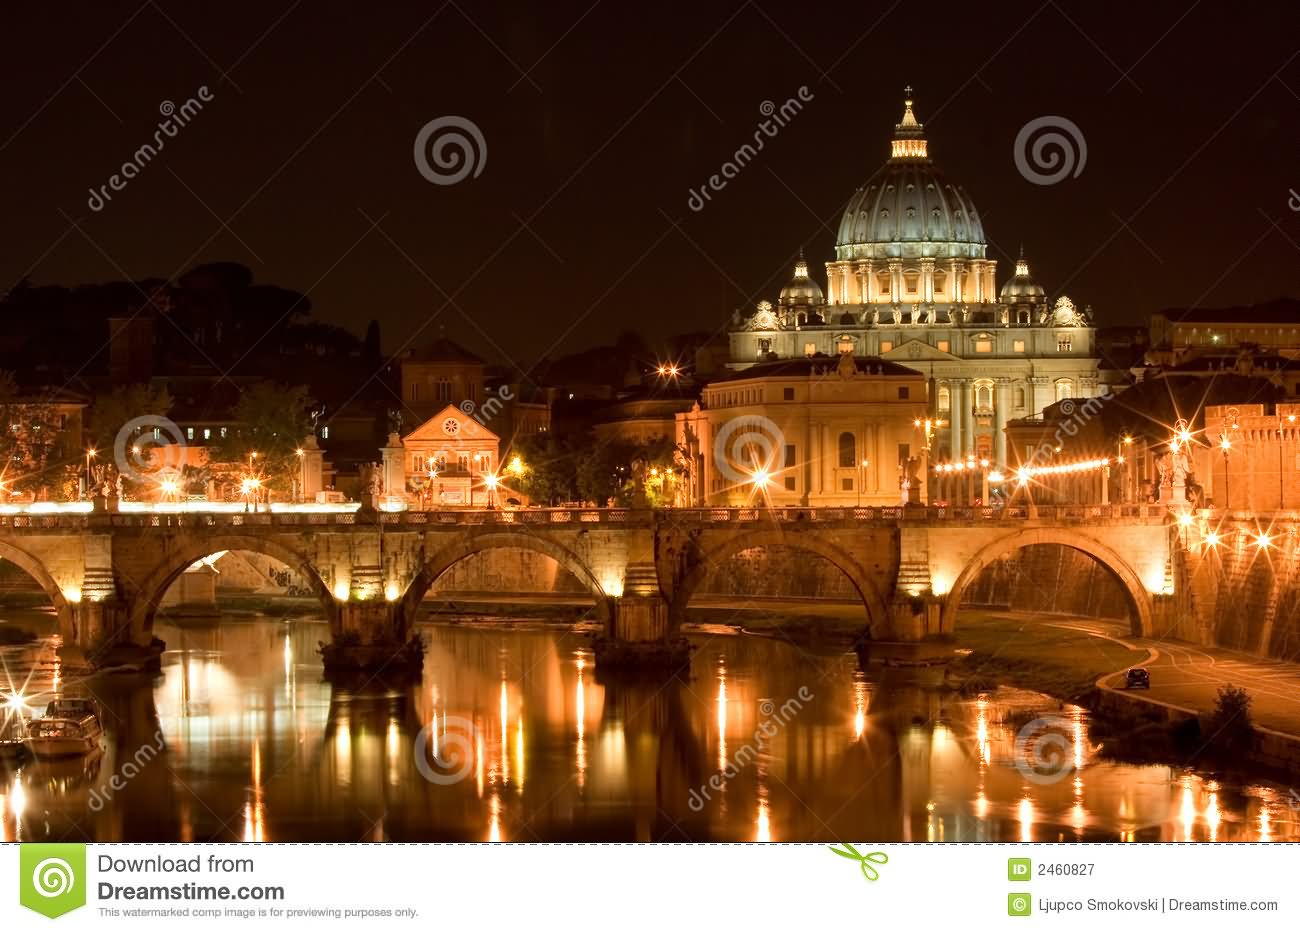 St. Peter's Basilica At Night Image